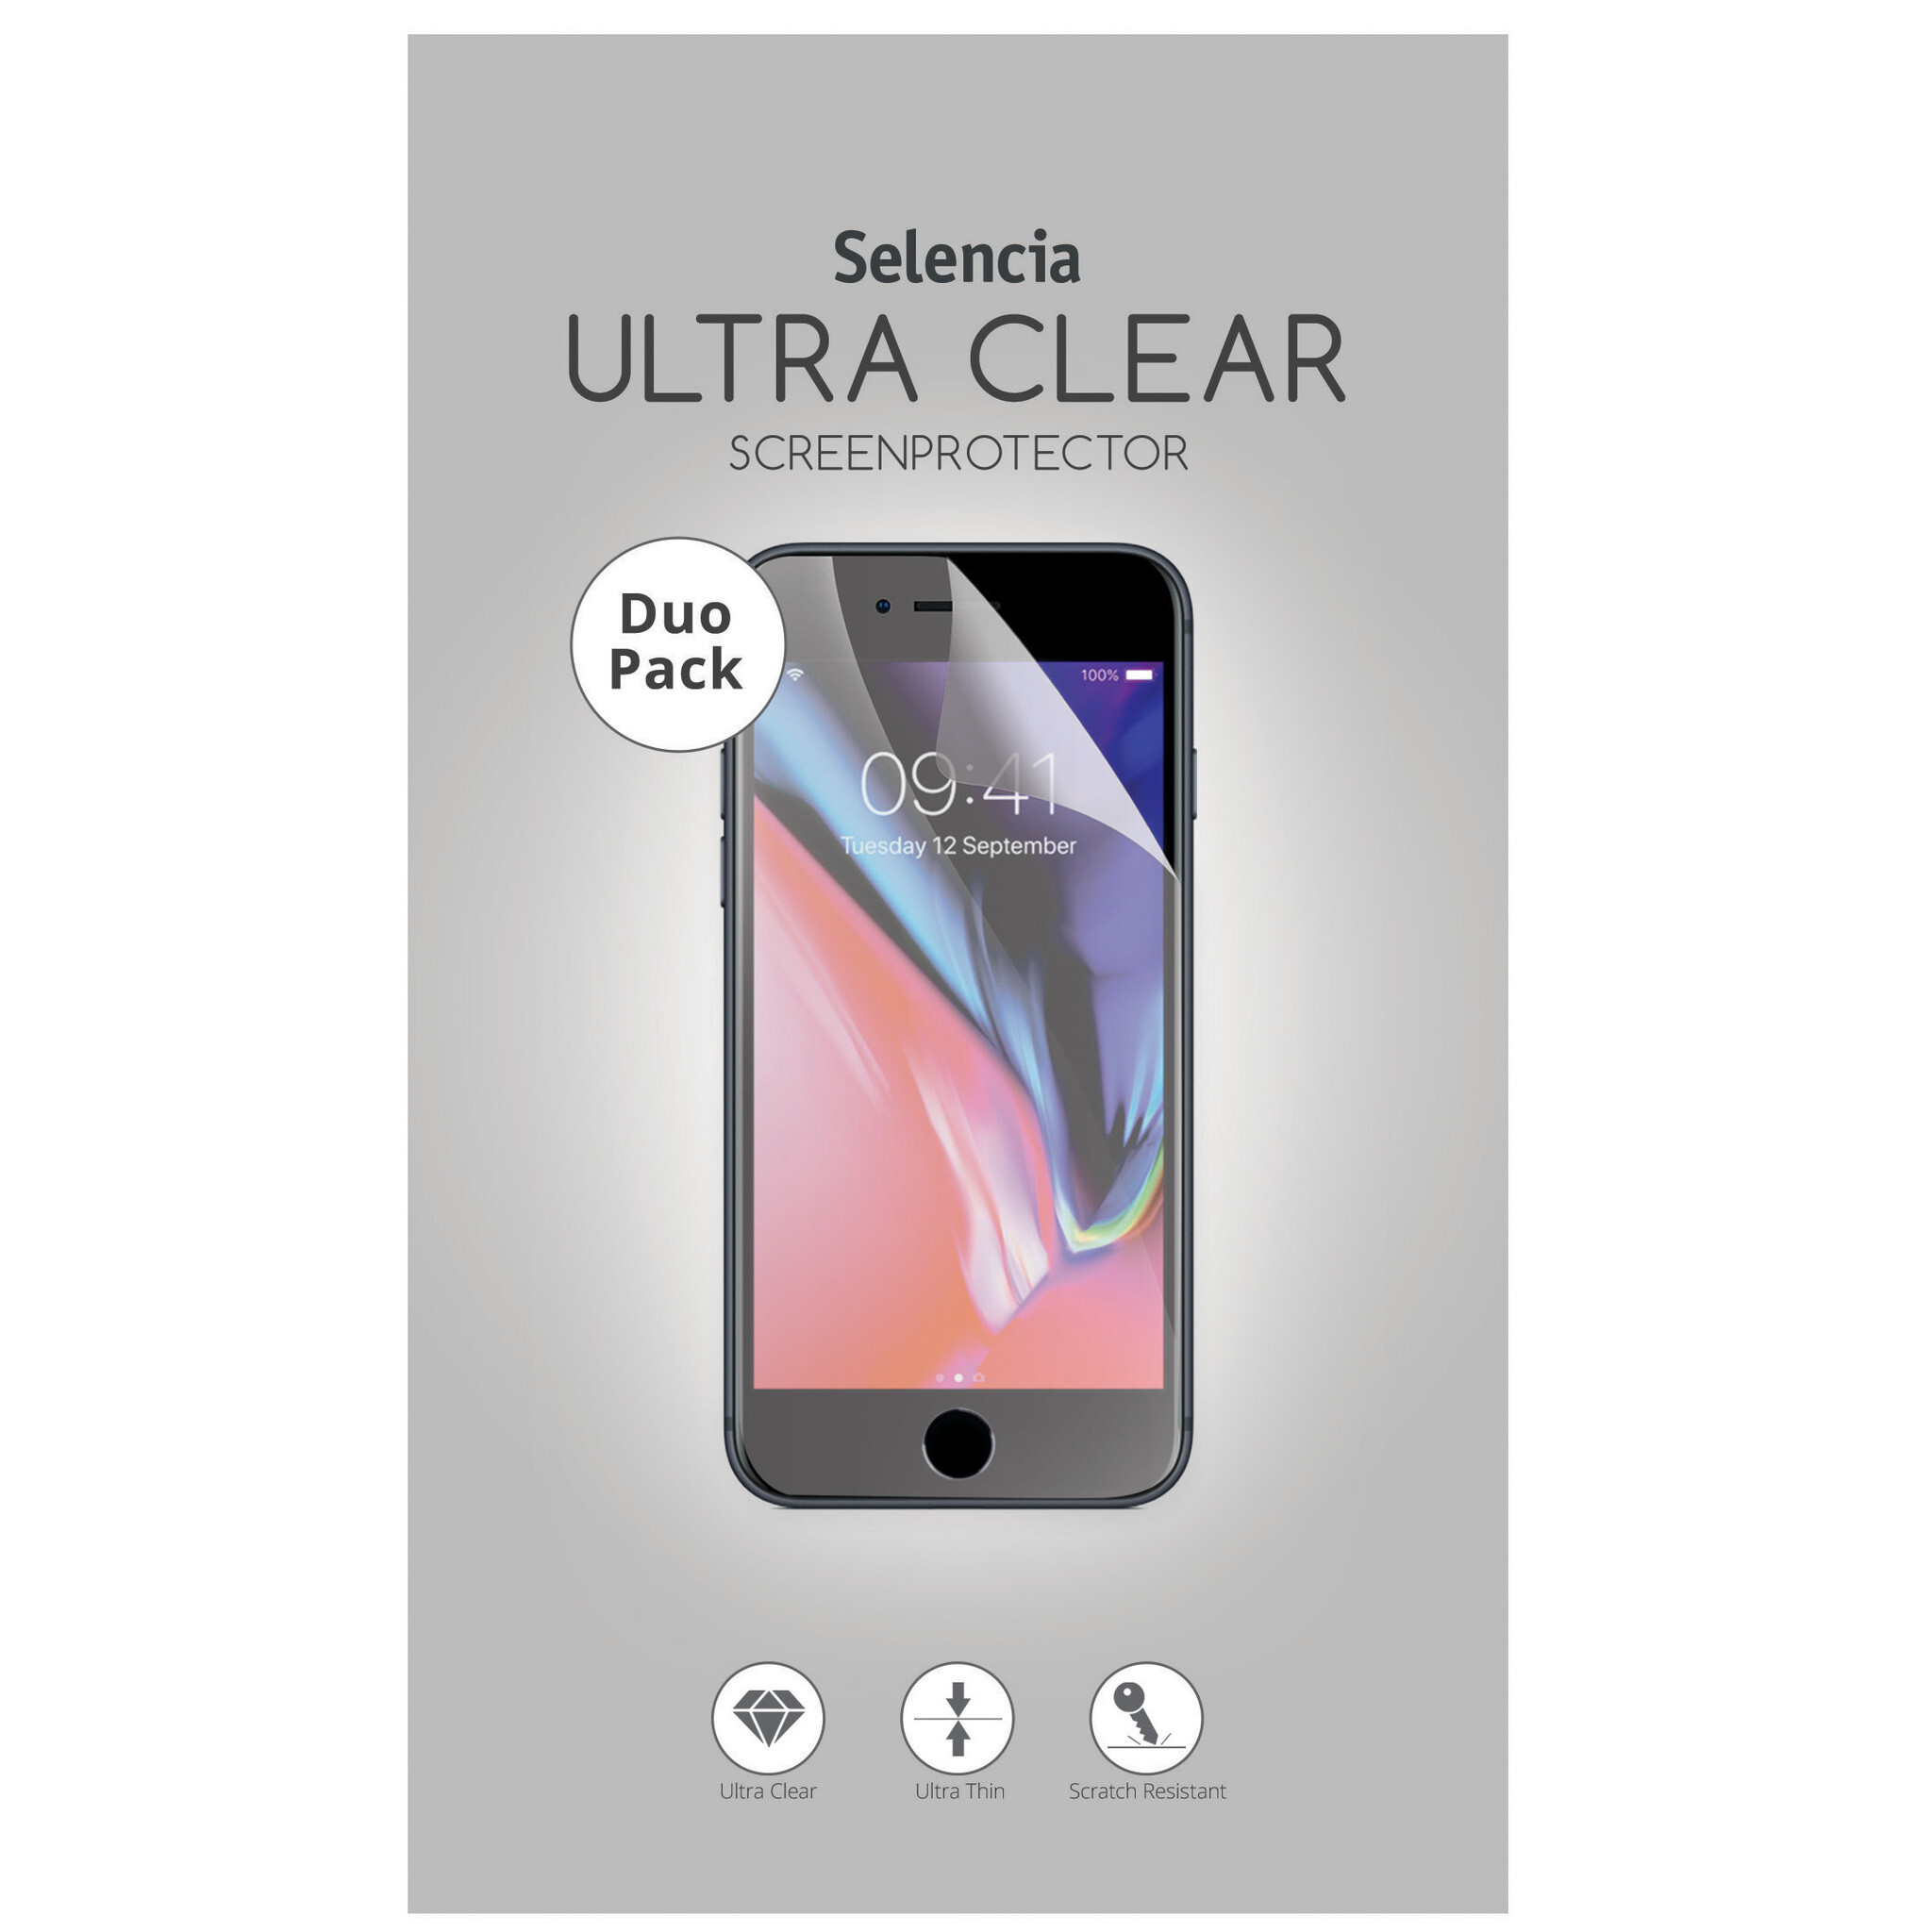 Selencia Duo Pack Ultra Clear Screenprotector voor de iPhone 12 6.7 inch